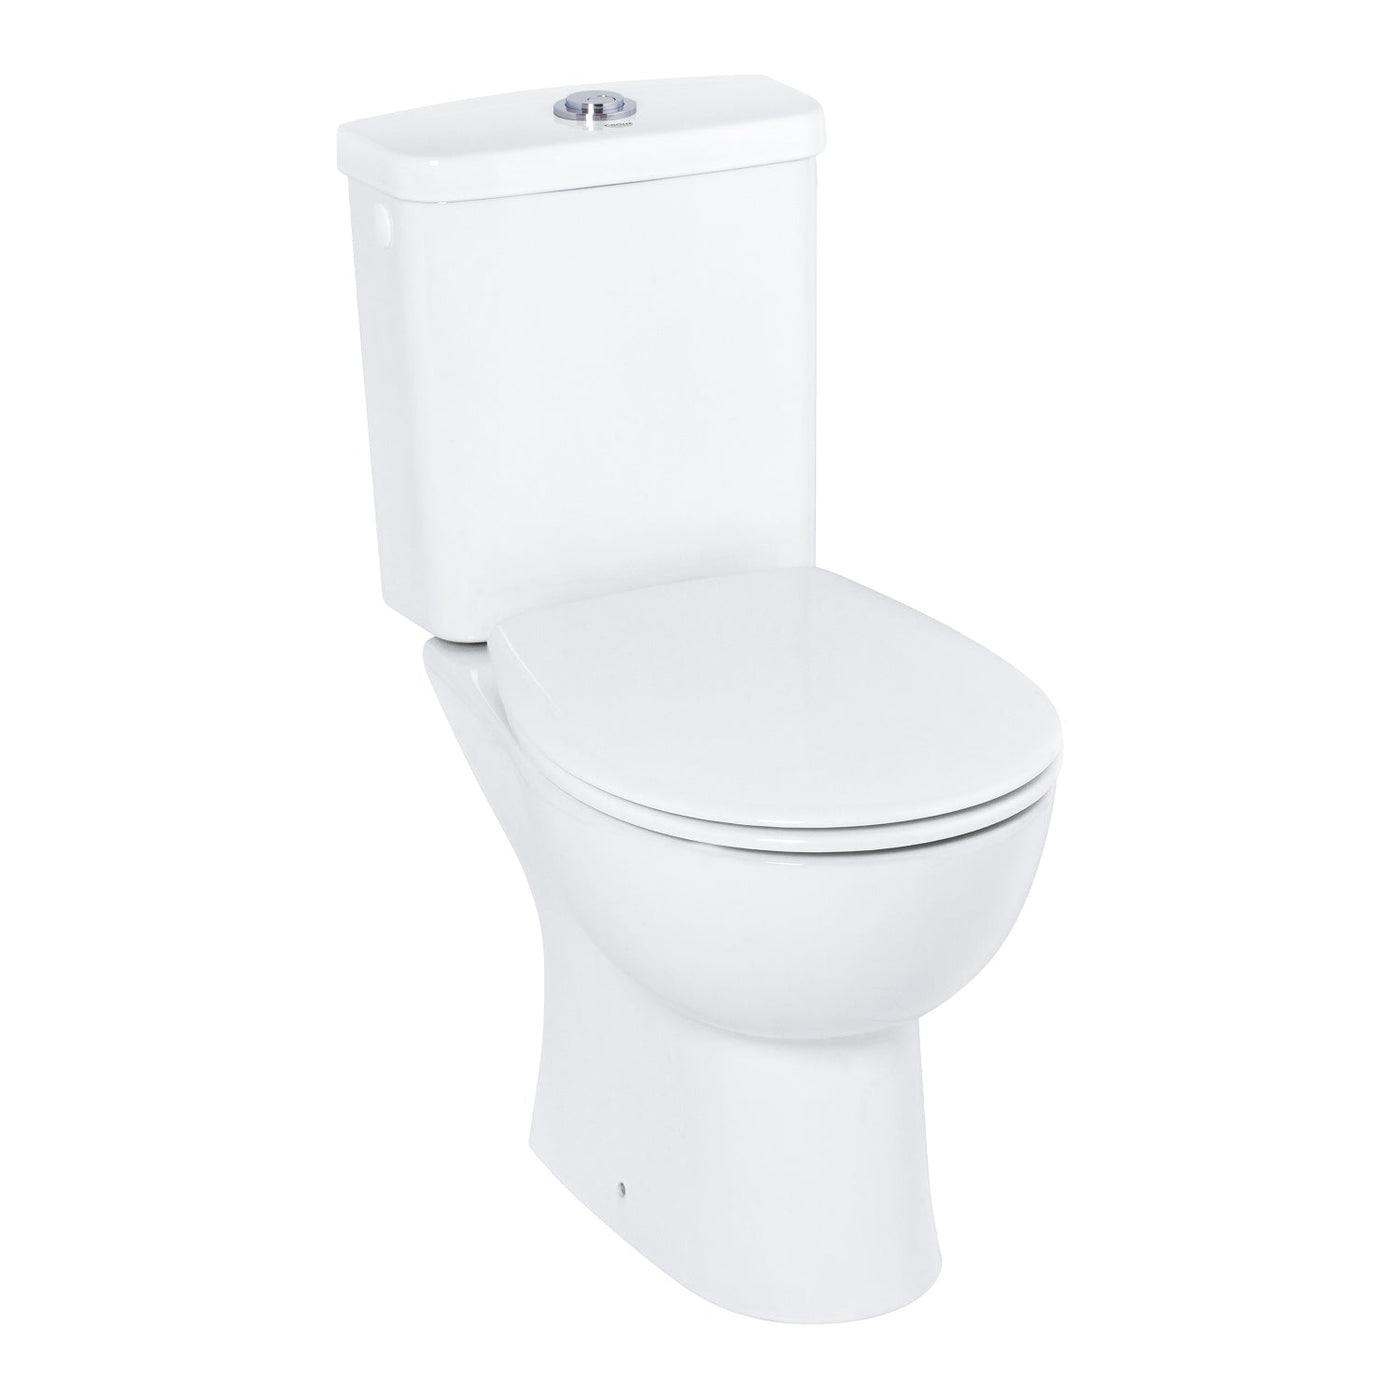 Grohe Bau Ceramic Bundle close coupled Toilet GH_39496000 - Letta London - 